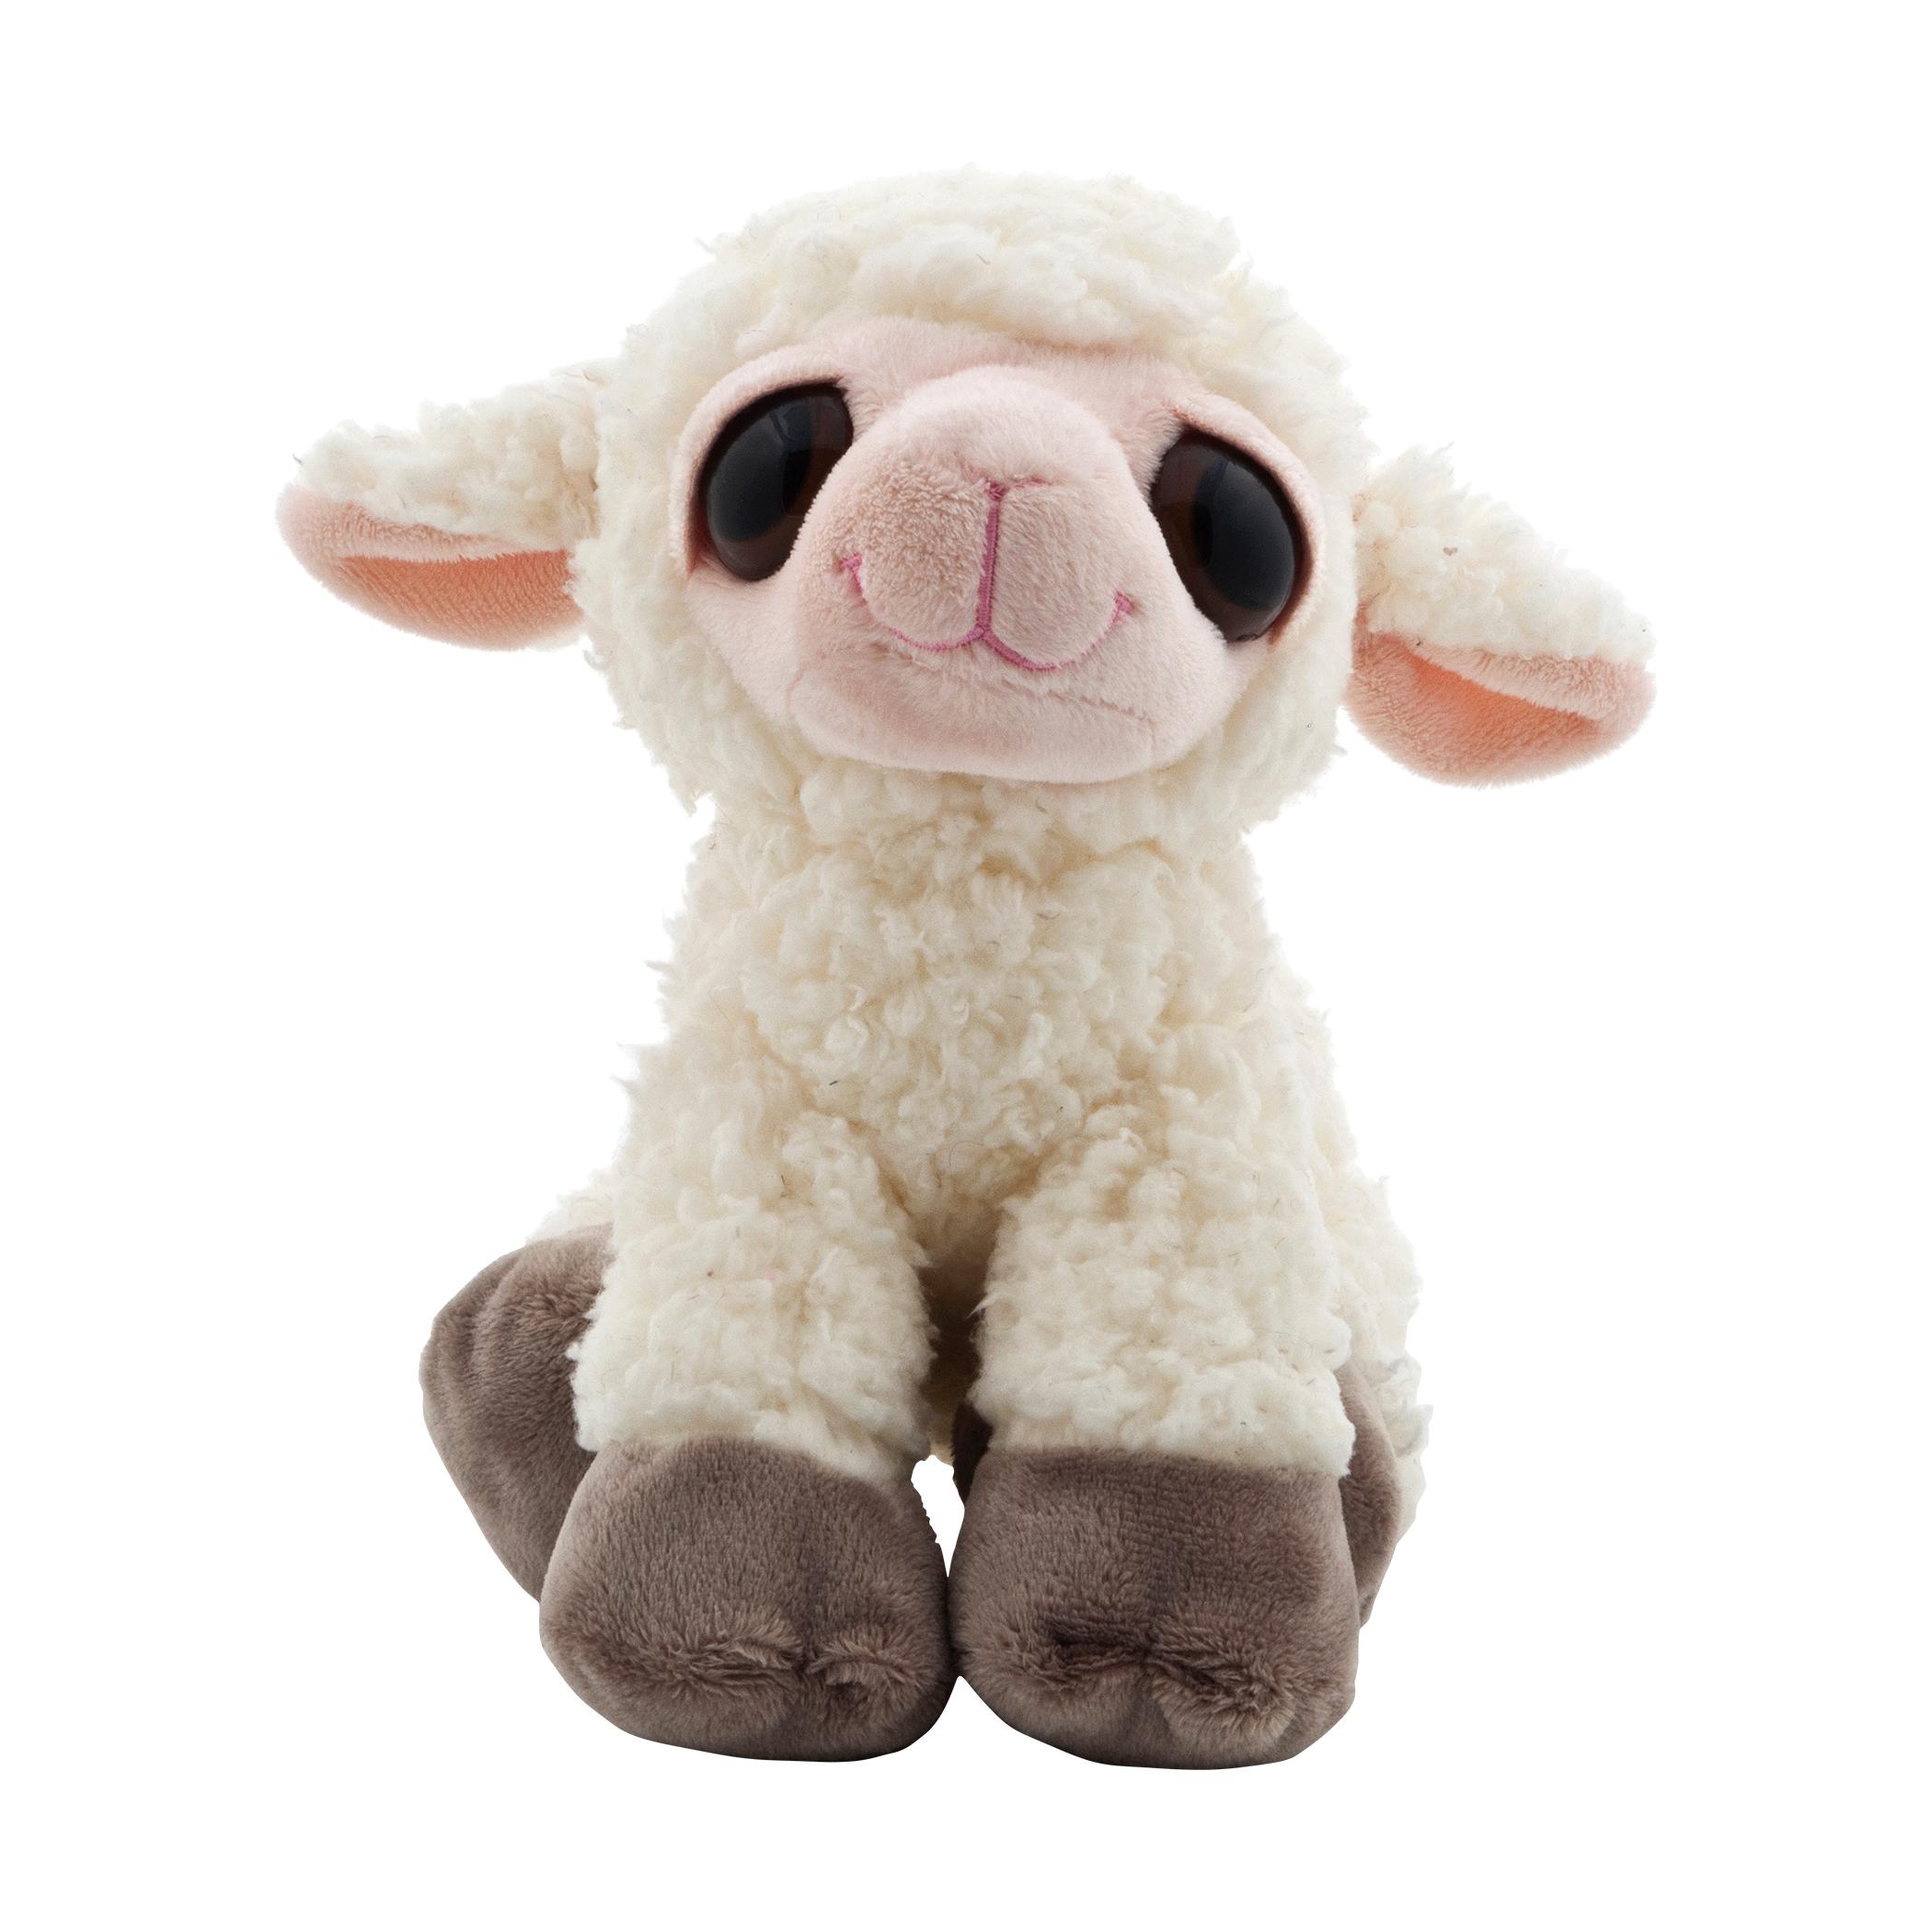  Dreamy- Eyed Lamb Plush Toy